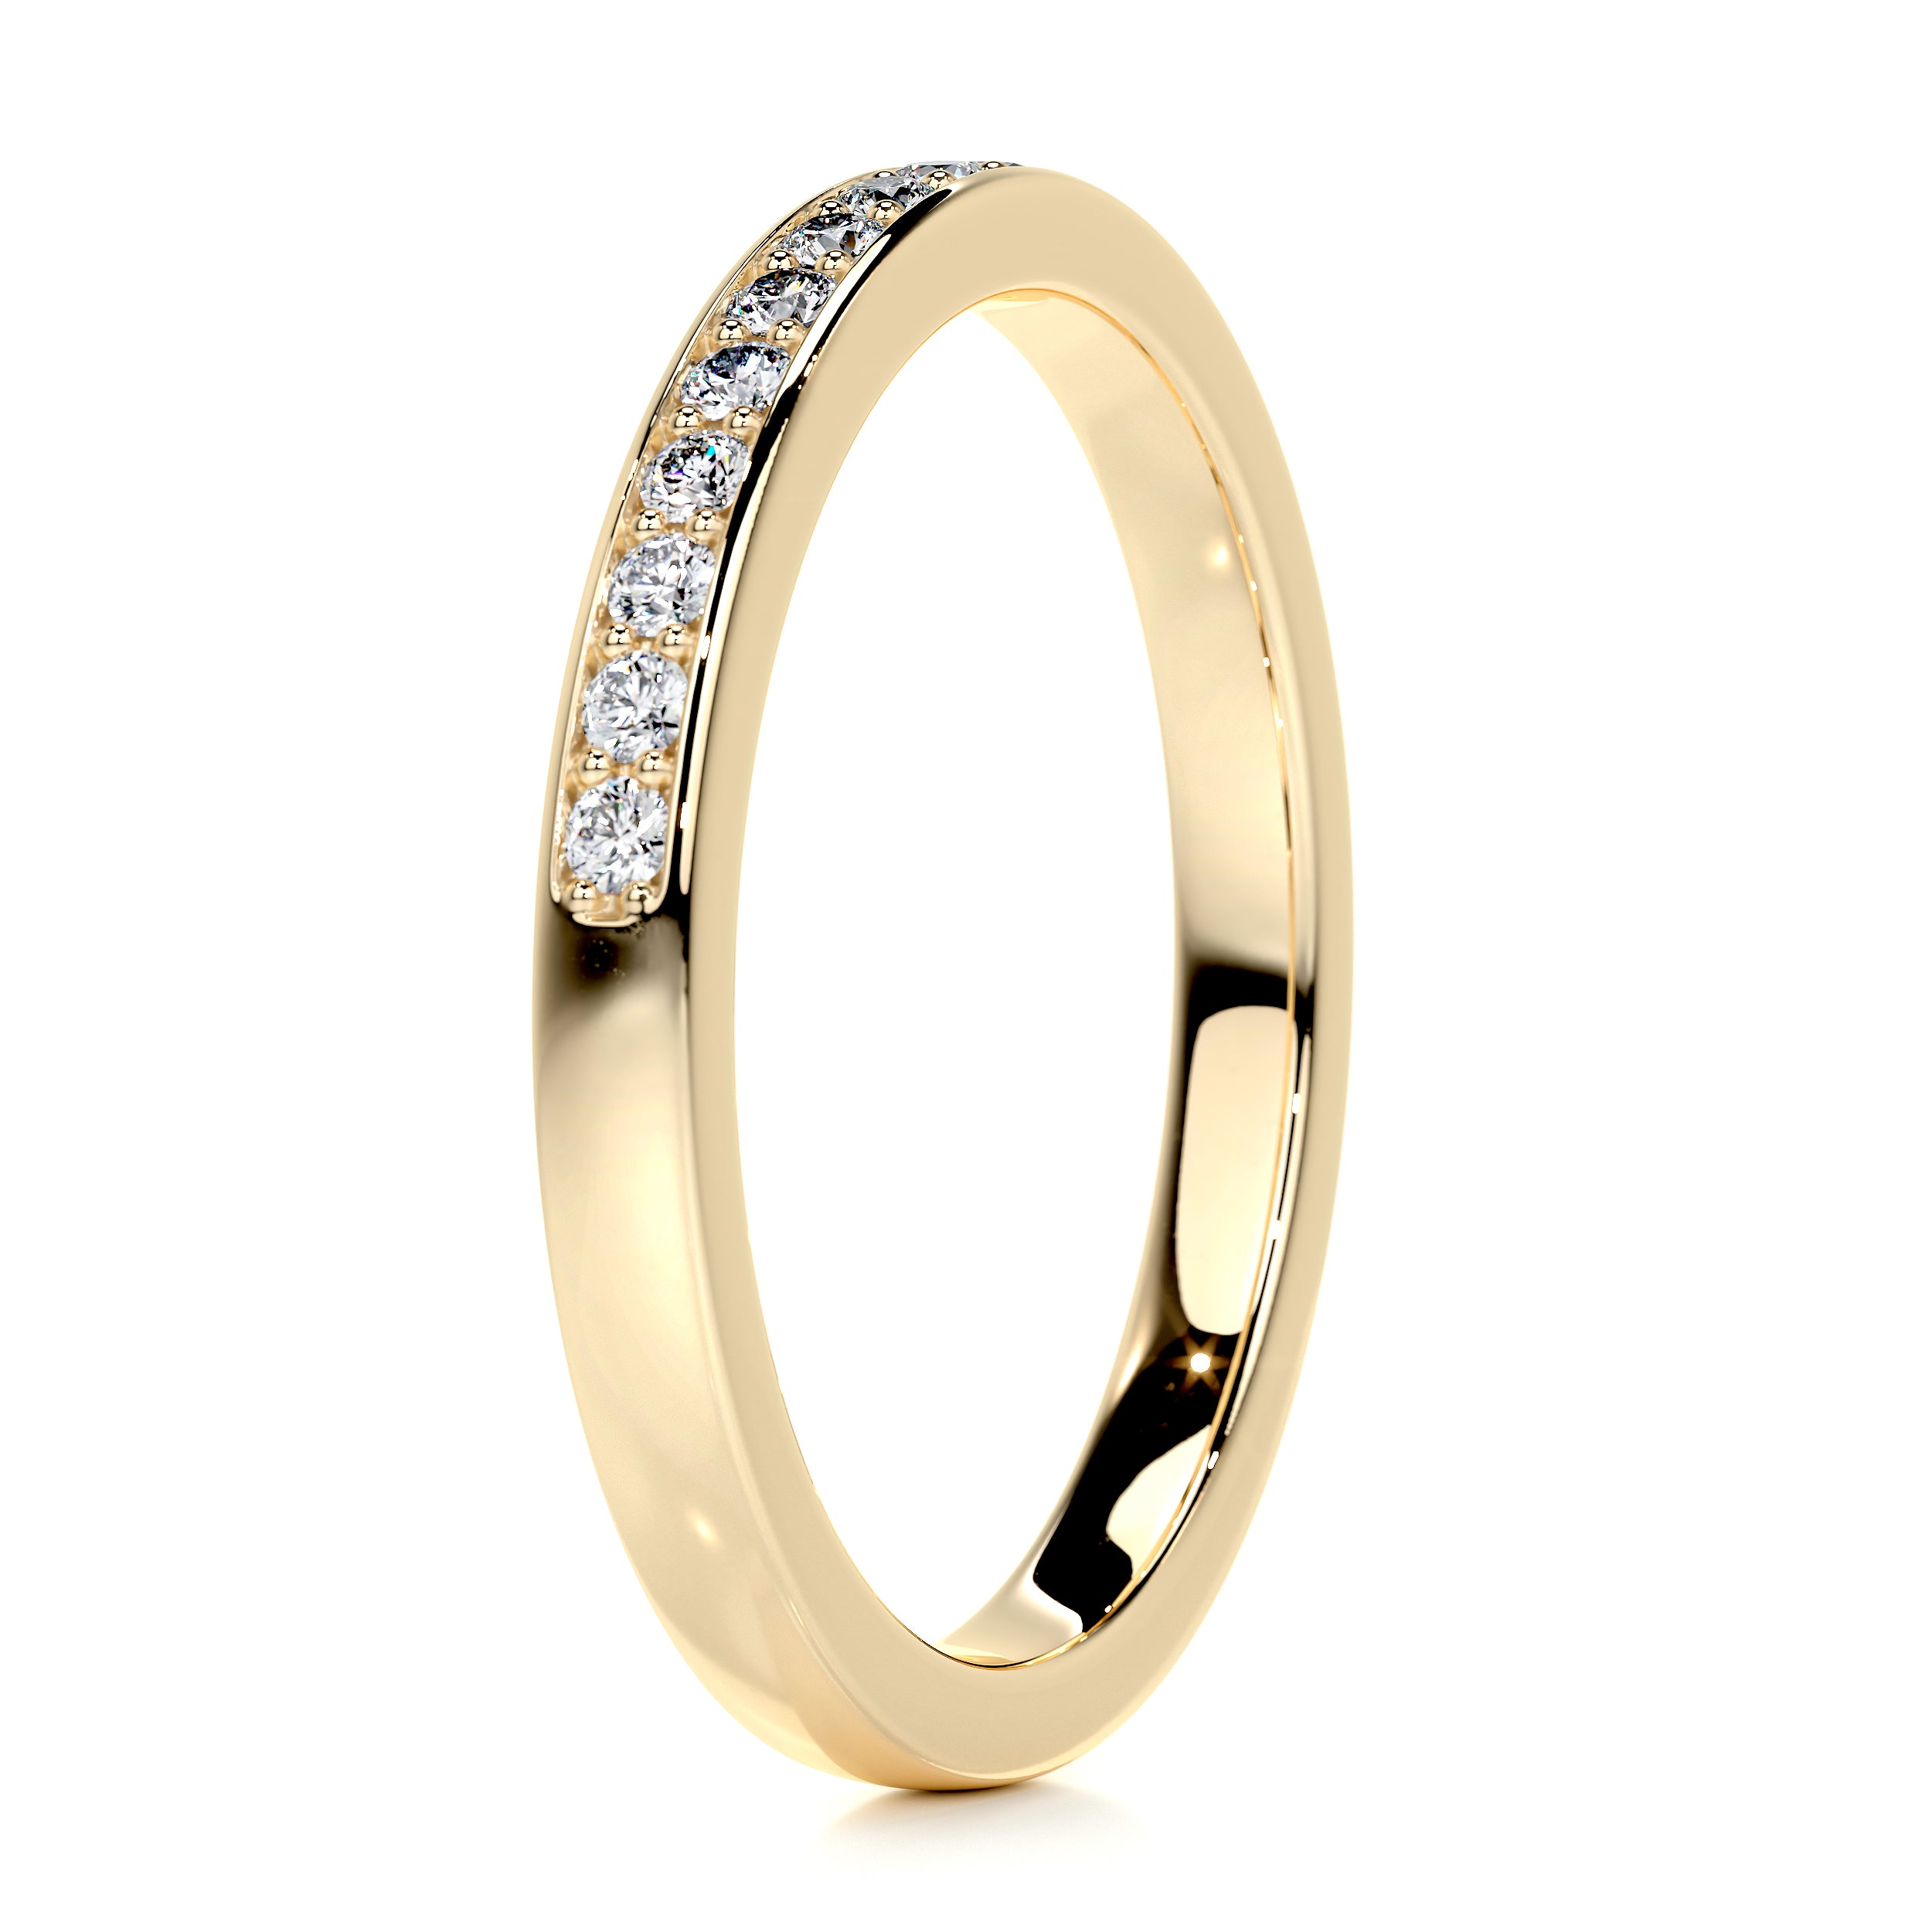 Giselle Diamond Wedding Ring   (0.2 Carat) -18K Yellow Gold